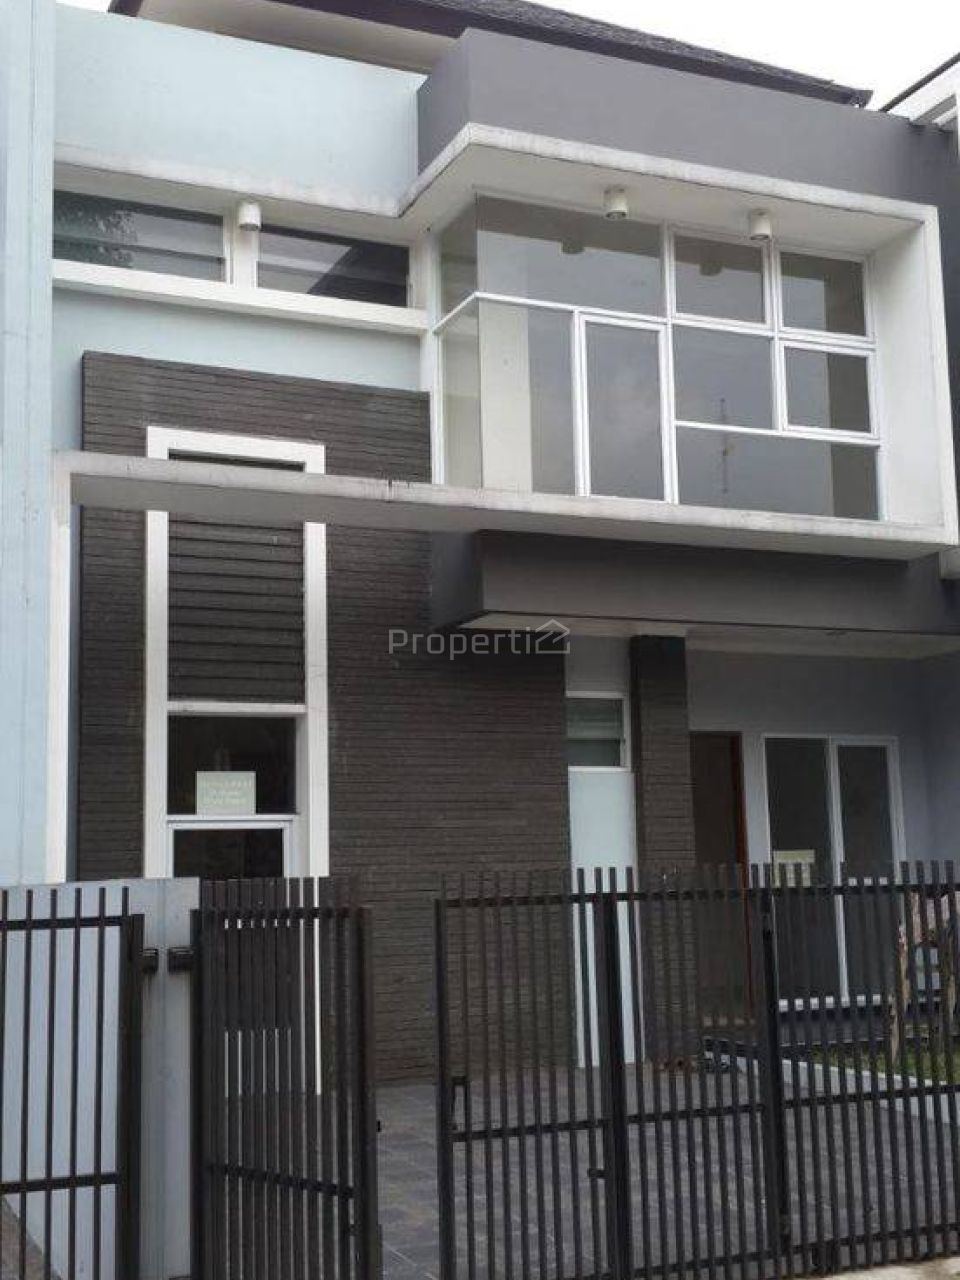 2 Storey House in Setrasari, Bandung City, Jawa Barat